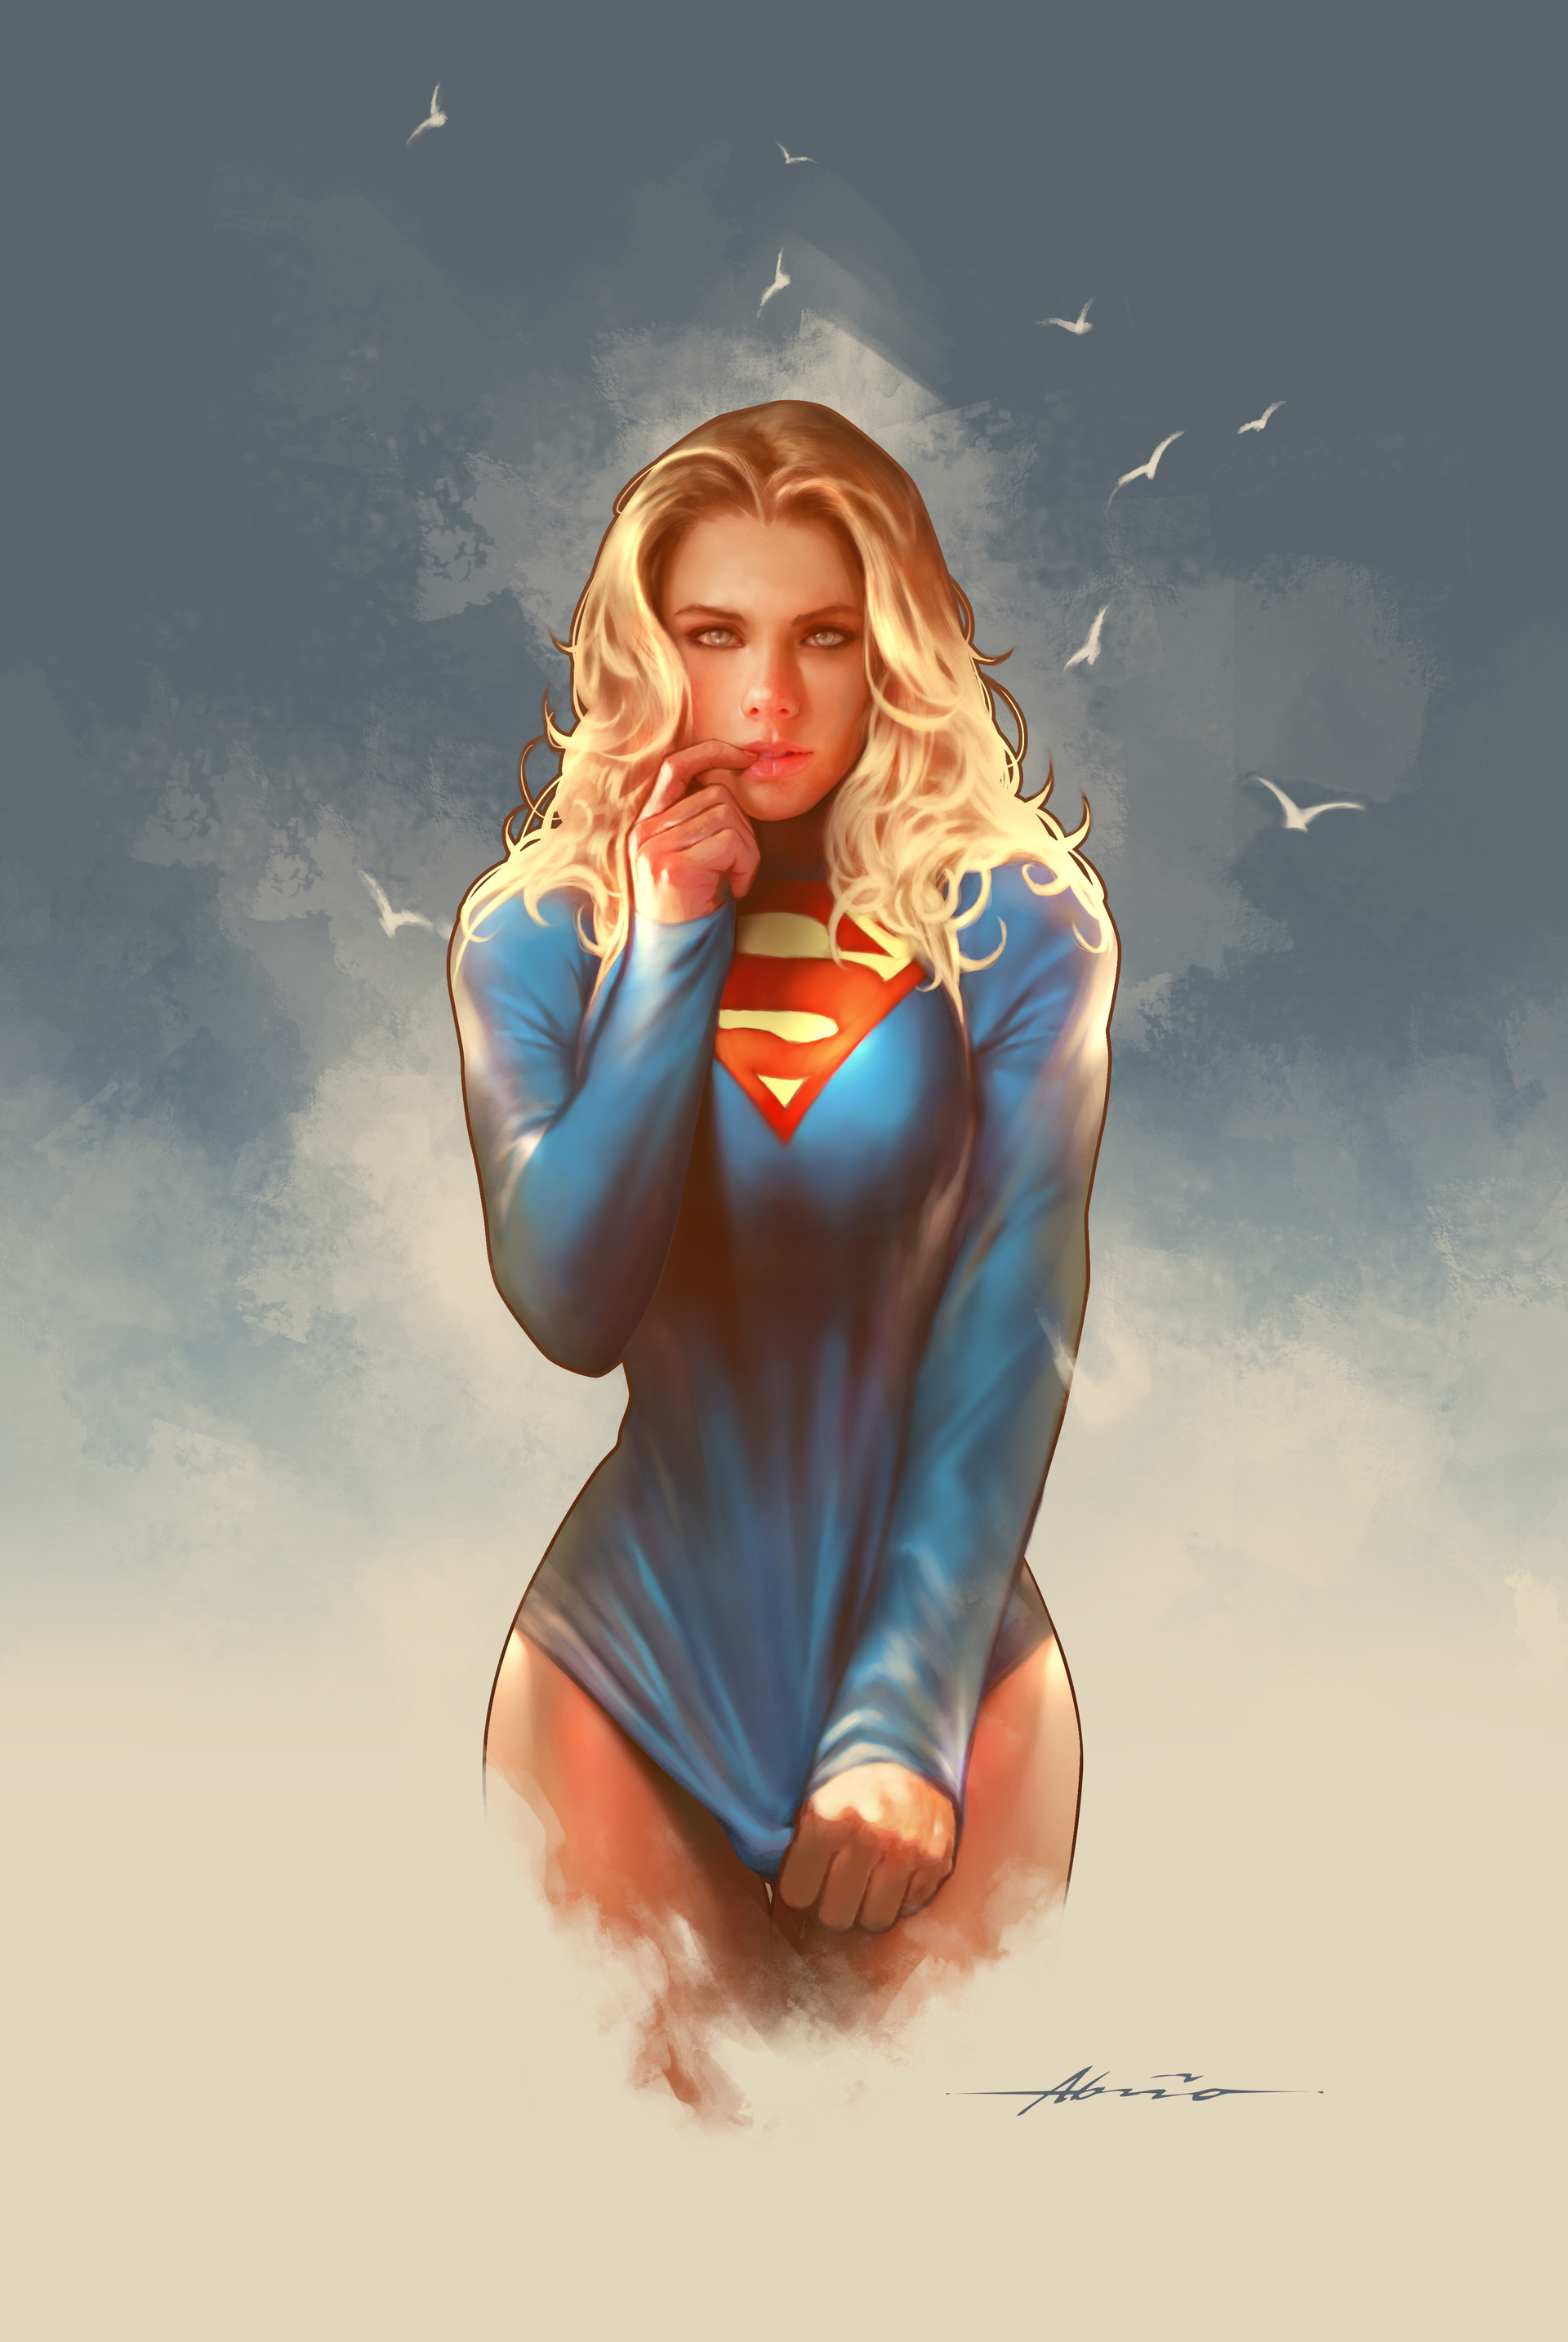 General 1920x2868 Supergirl comic art women digital art fan art DC Comics blonde long hair finger in mouth stretching blue eyes